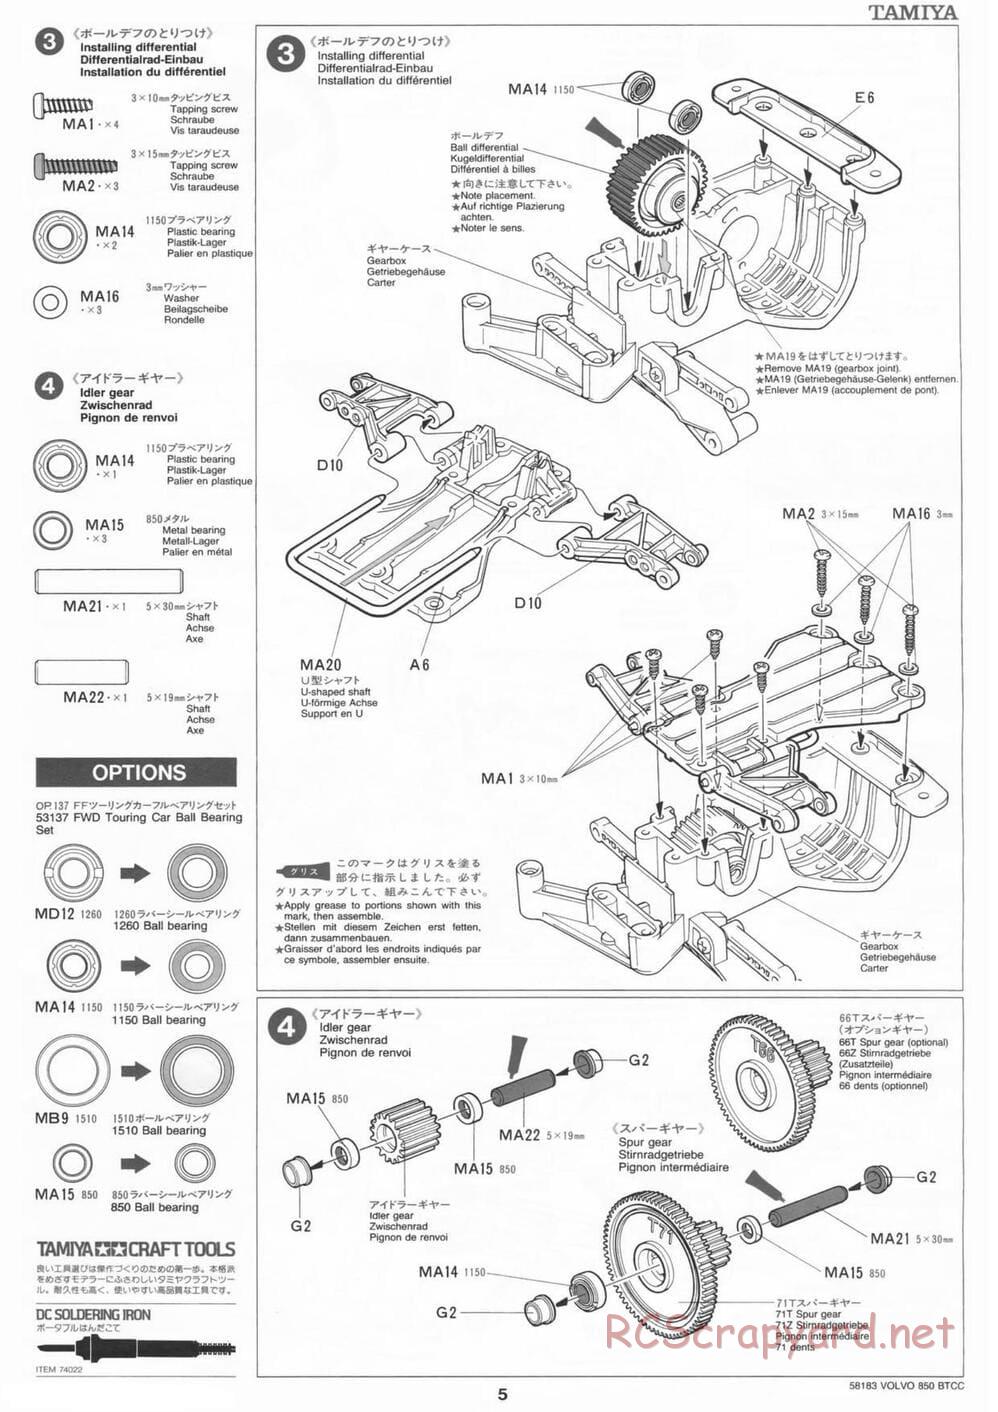 Tamiya - Volvo 850 BTCC - FF-01 Chassis - Manual - Page 5